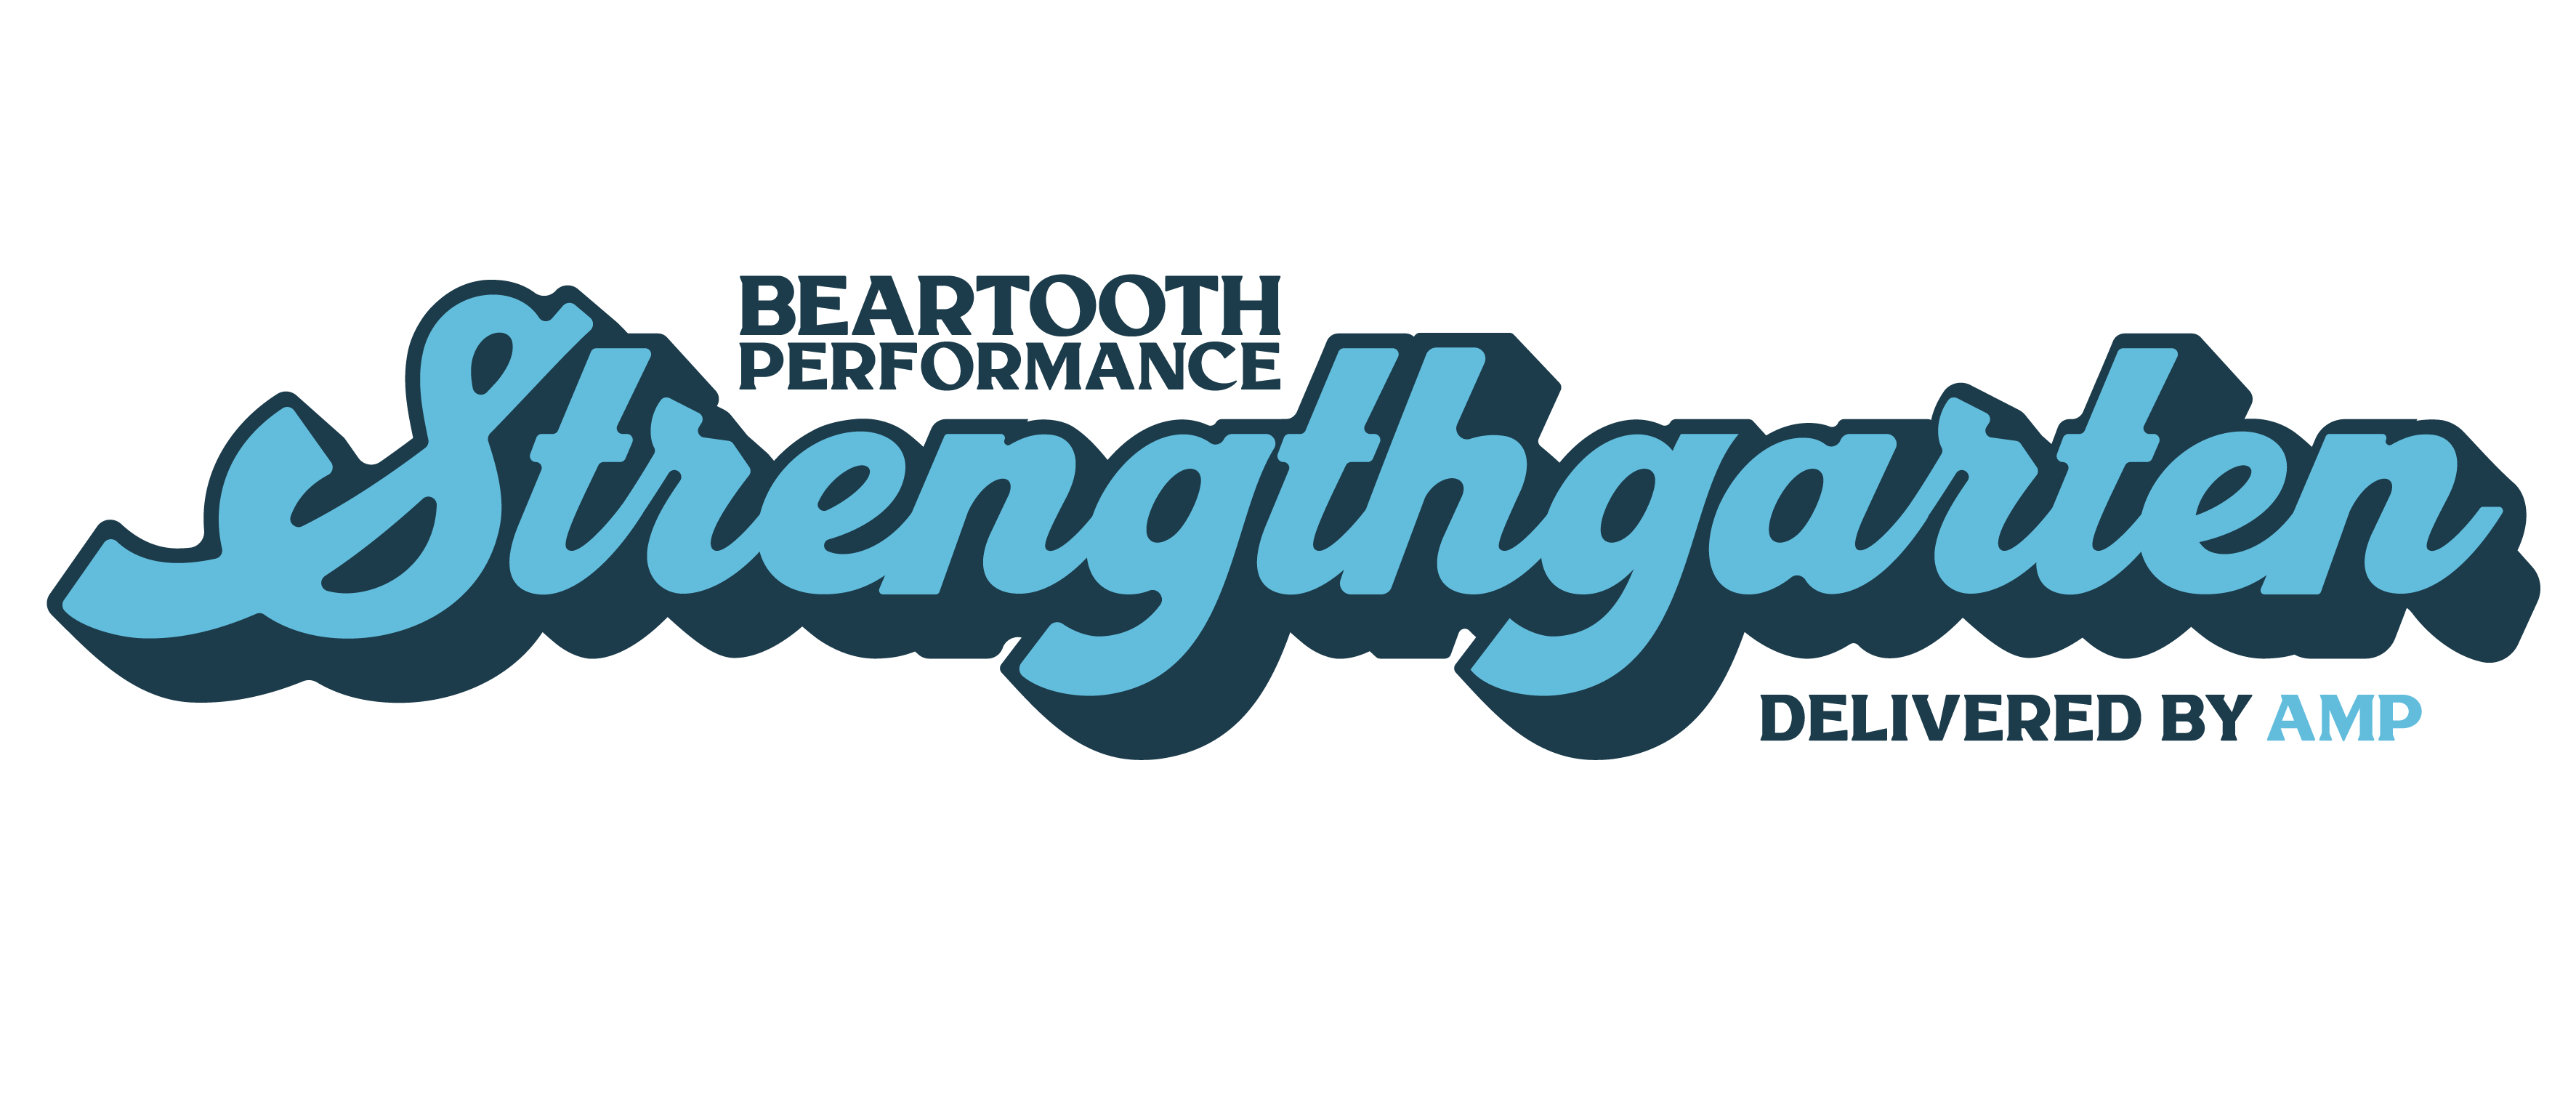 Beartooth-Performance_Strength-School-Logos-03